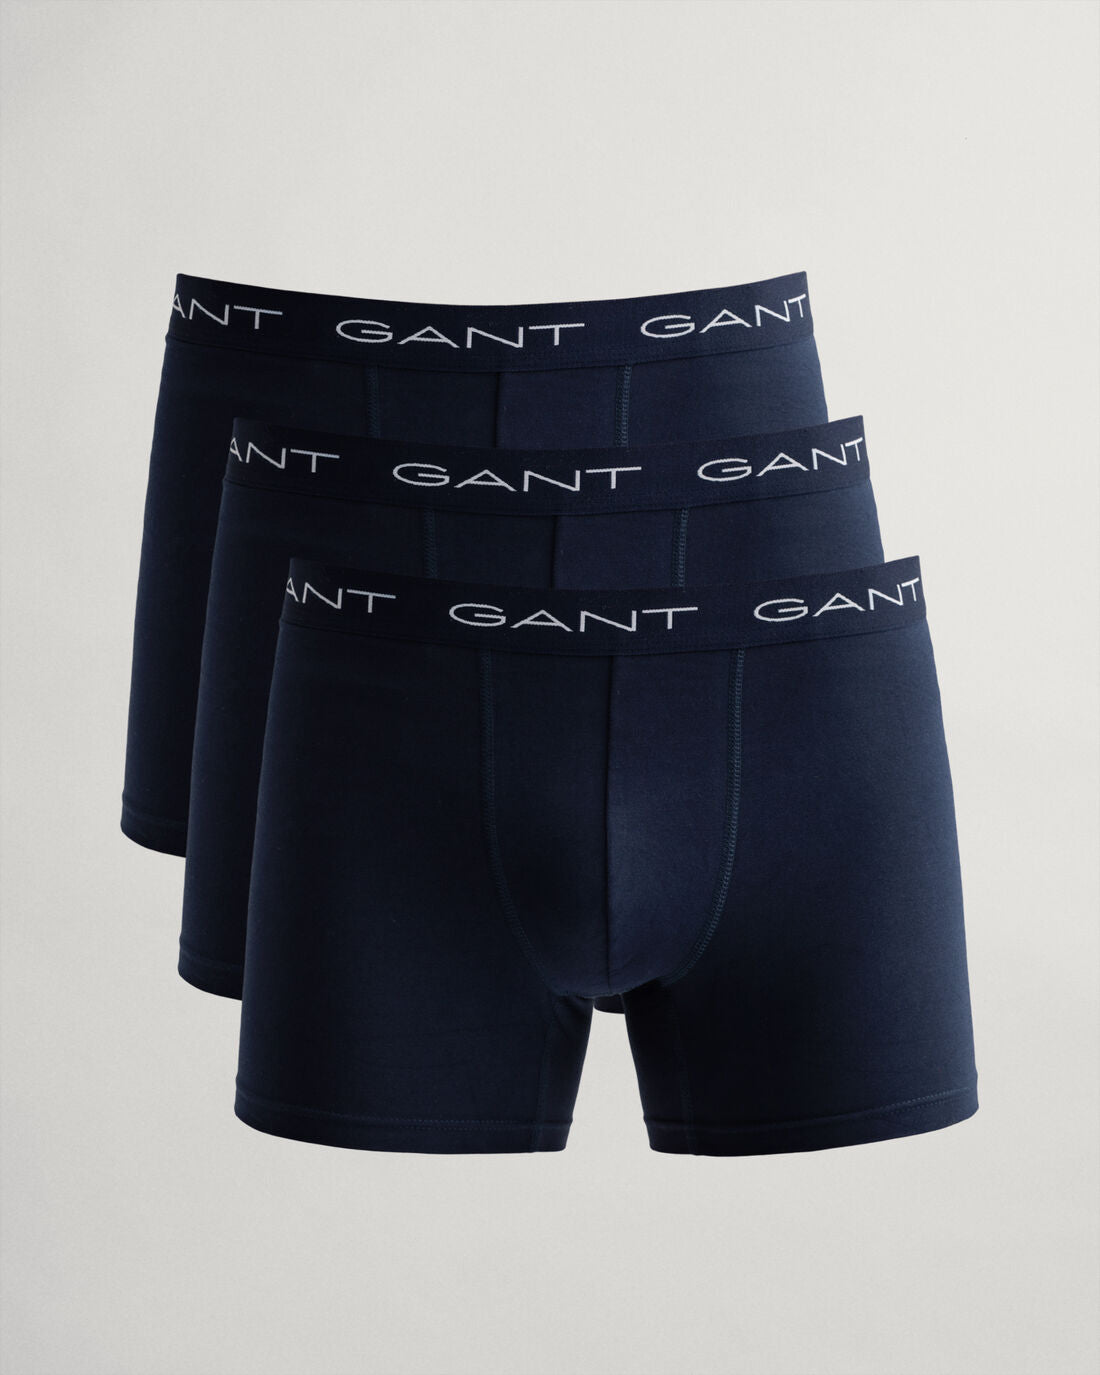 Gant Basic Trunk -Pack, in regular classic fit Navy colour.